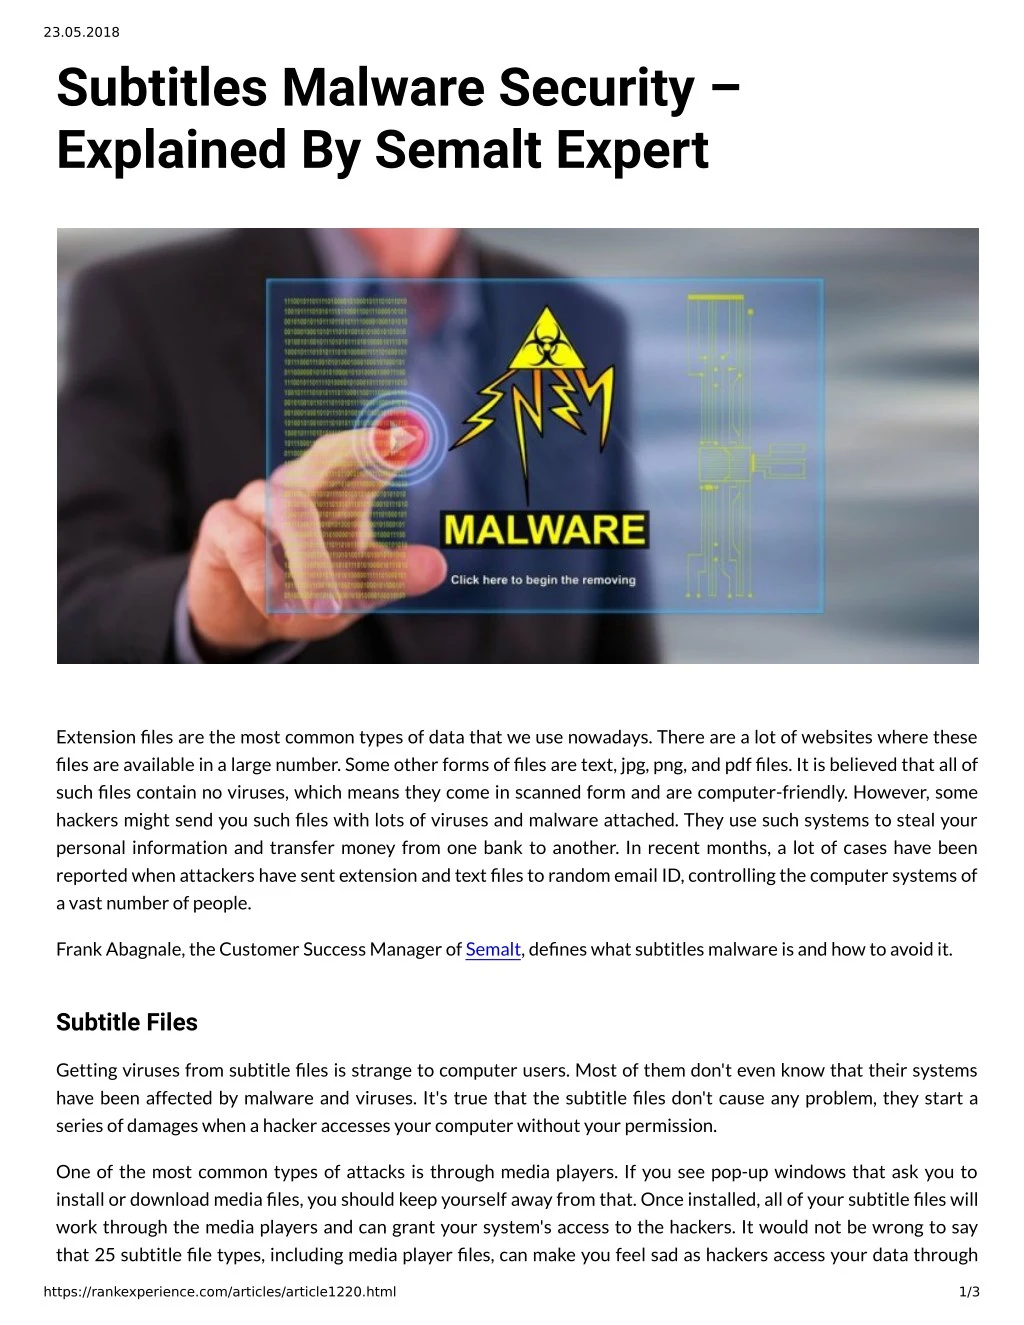 23 05 2018 subtitles malware security explained